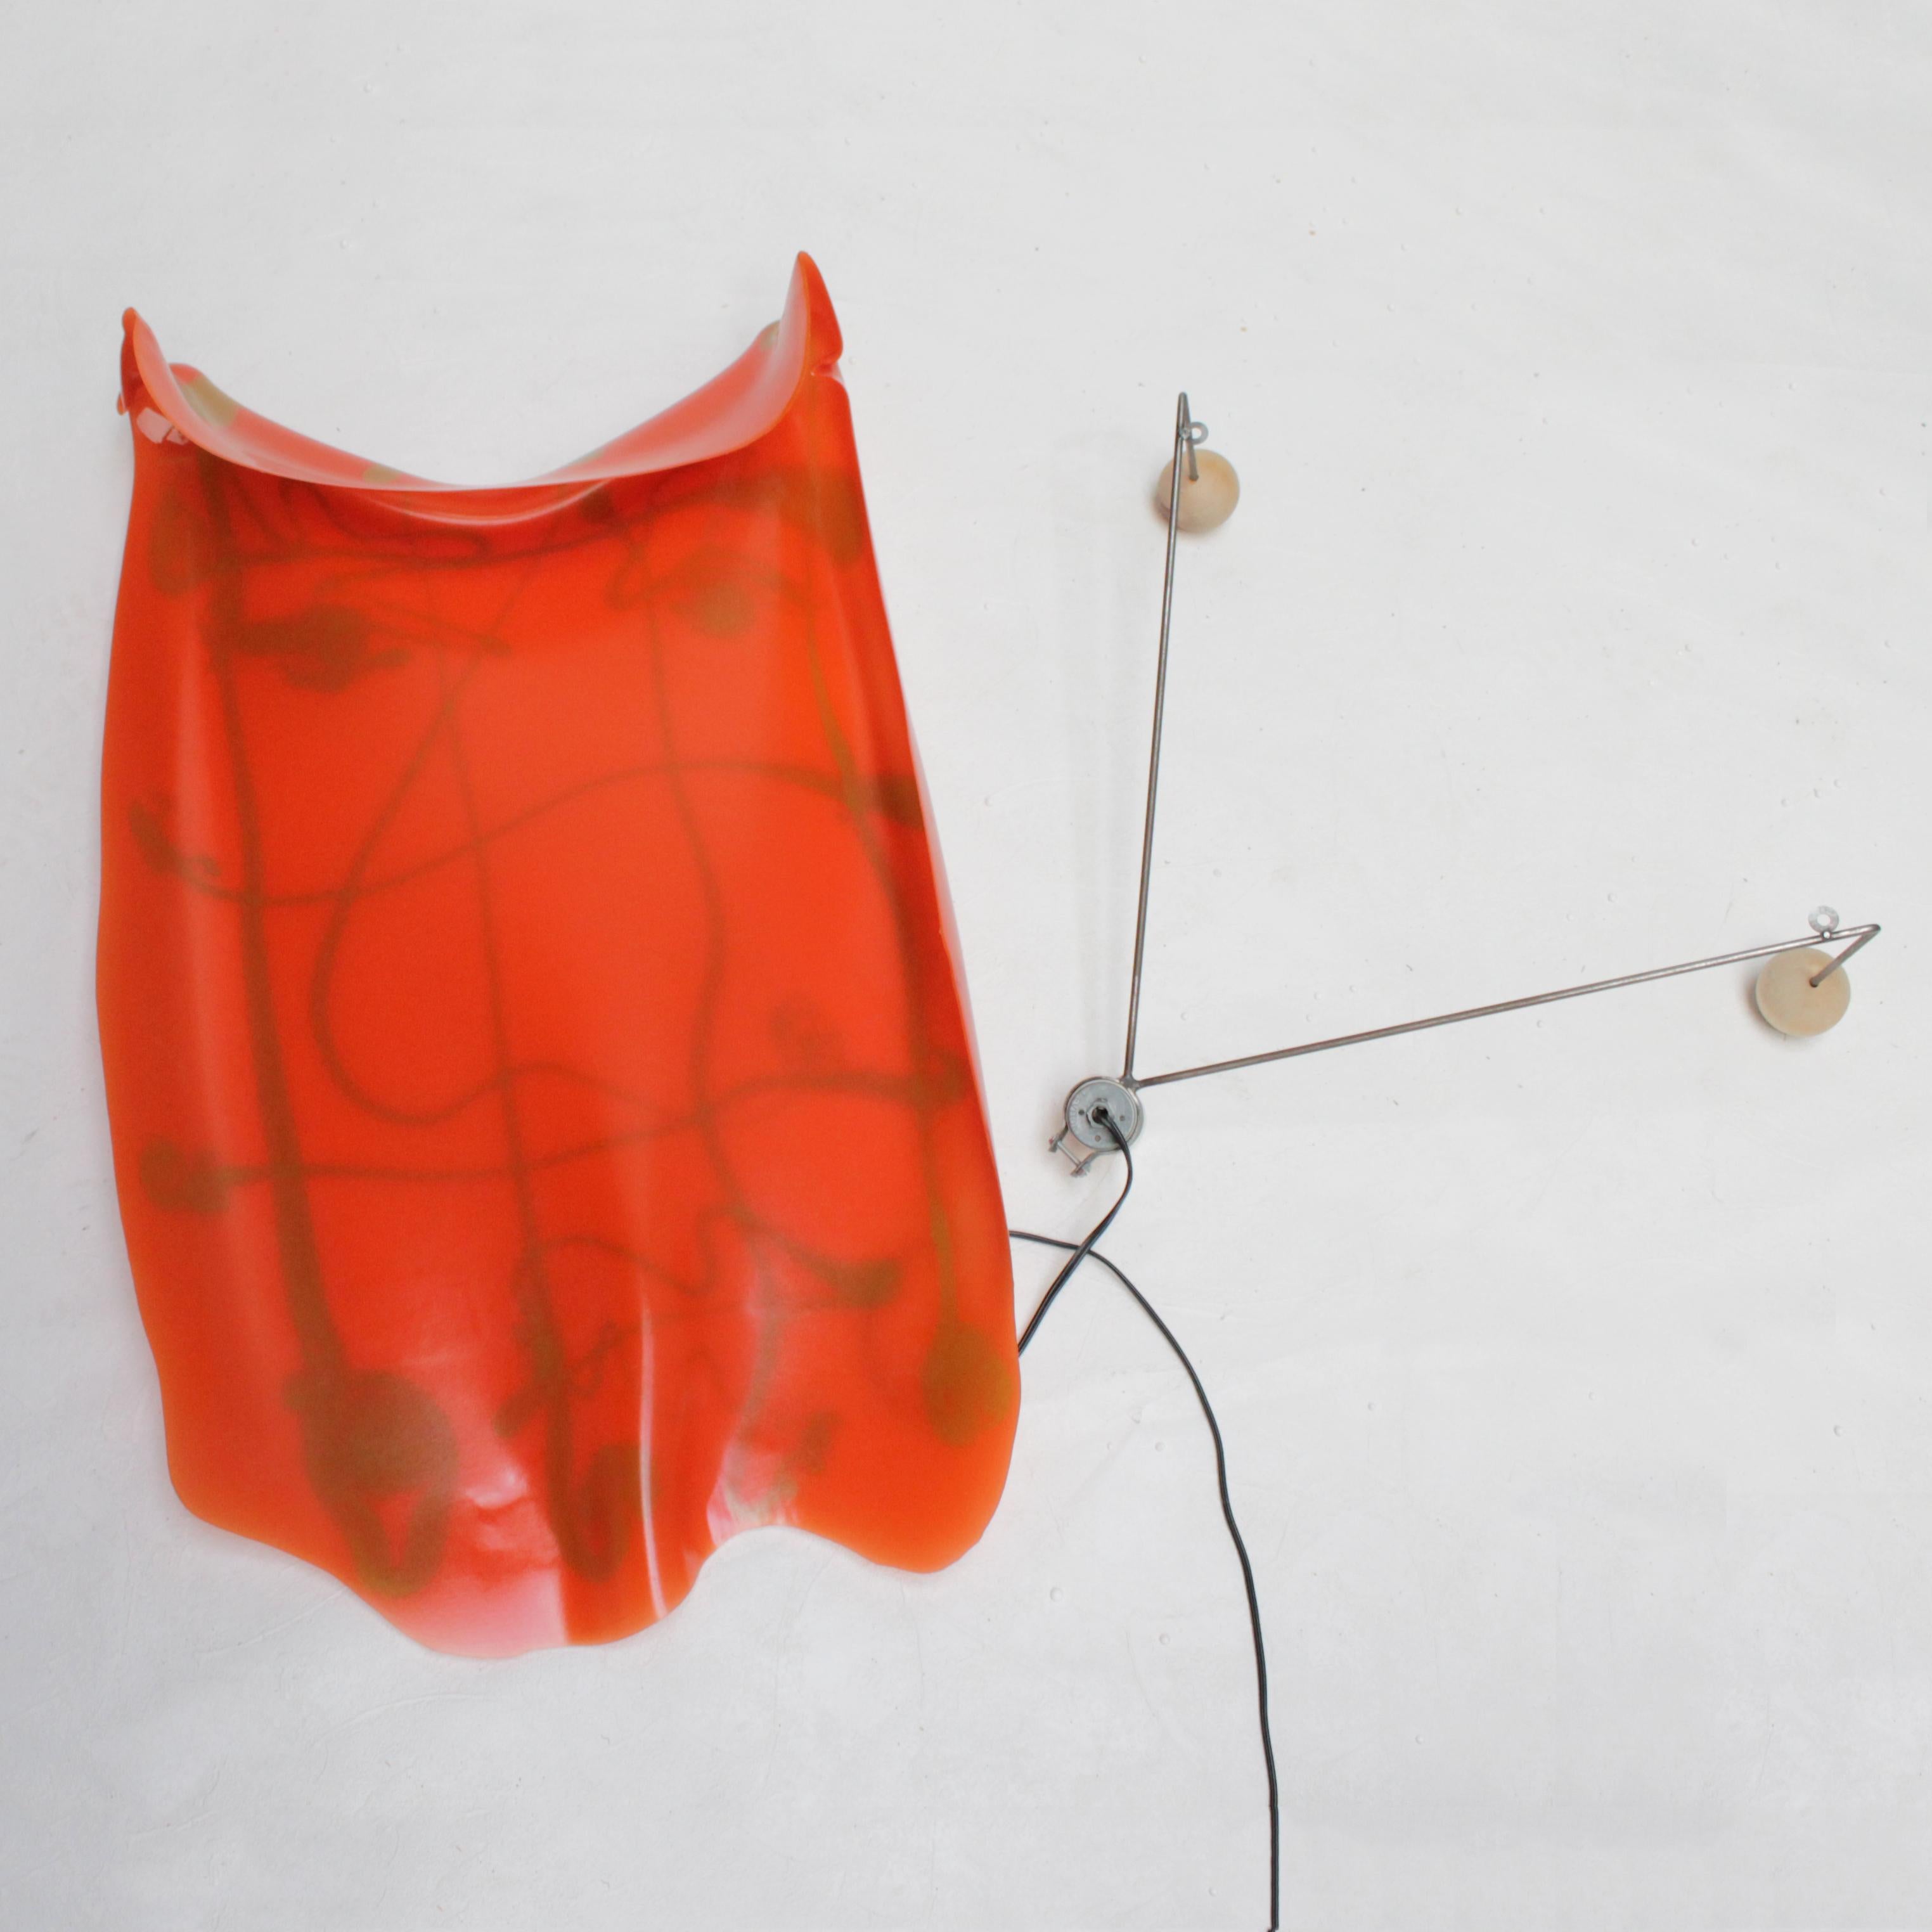 'Rag' Light by Gaetano Pesce for Fish Design 10